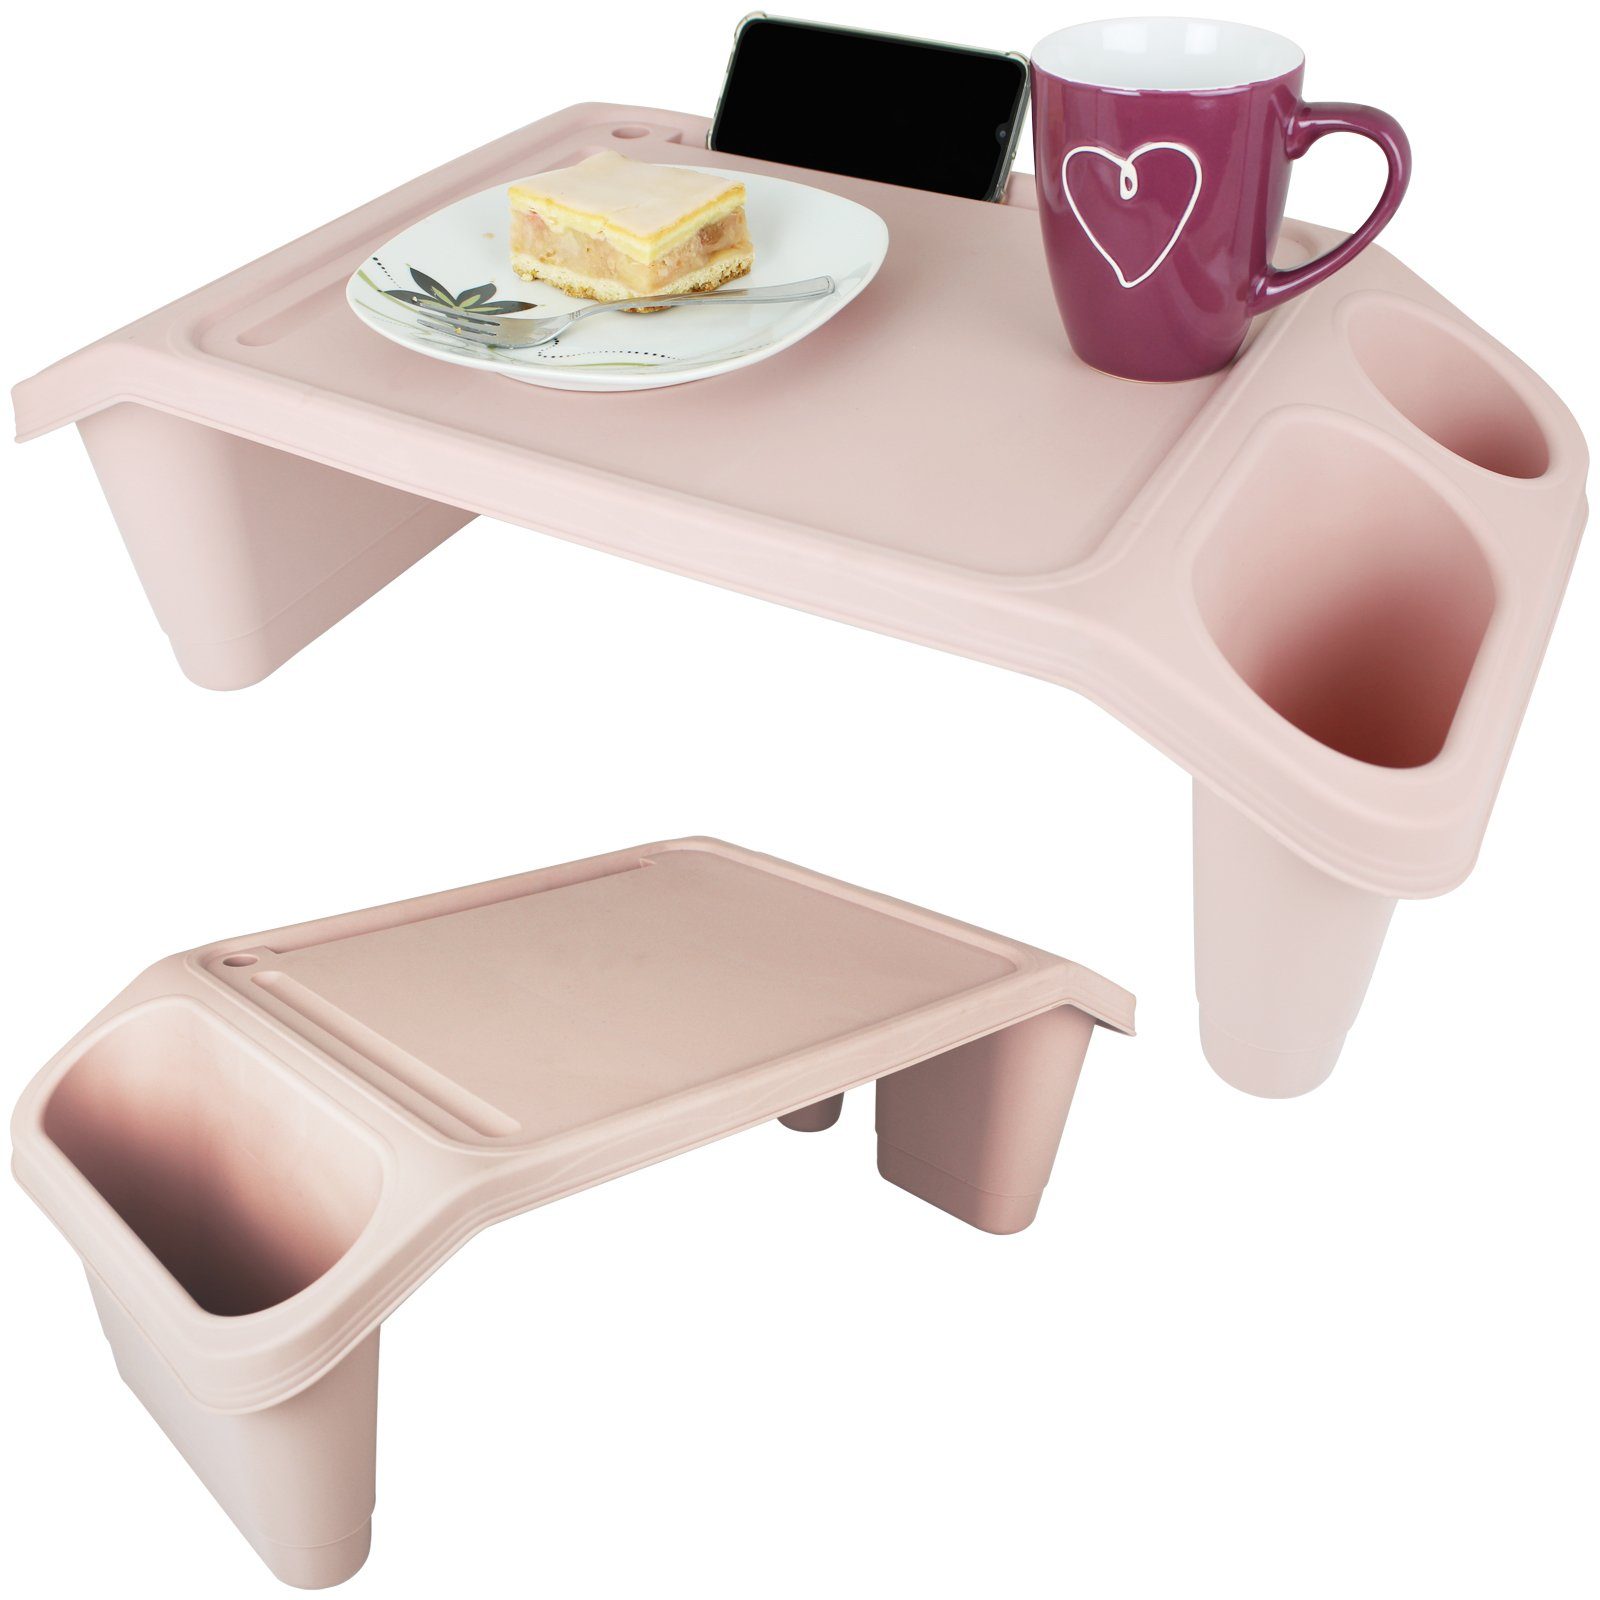 Koopman Tabletttisch Bett-Serviertablett Farbwahl Tablett Bett Tisch Serviertisch, Beistelltisch Couchtablett Betttisch Frühstück Frühstückstablett